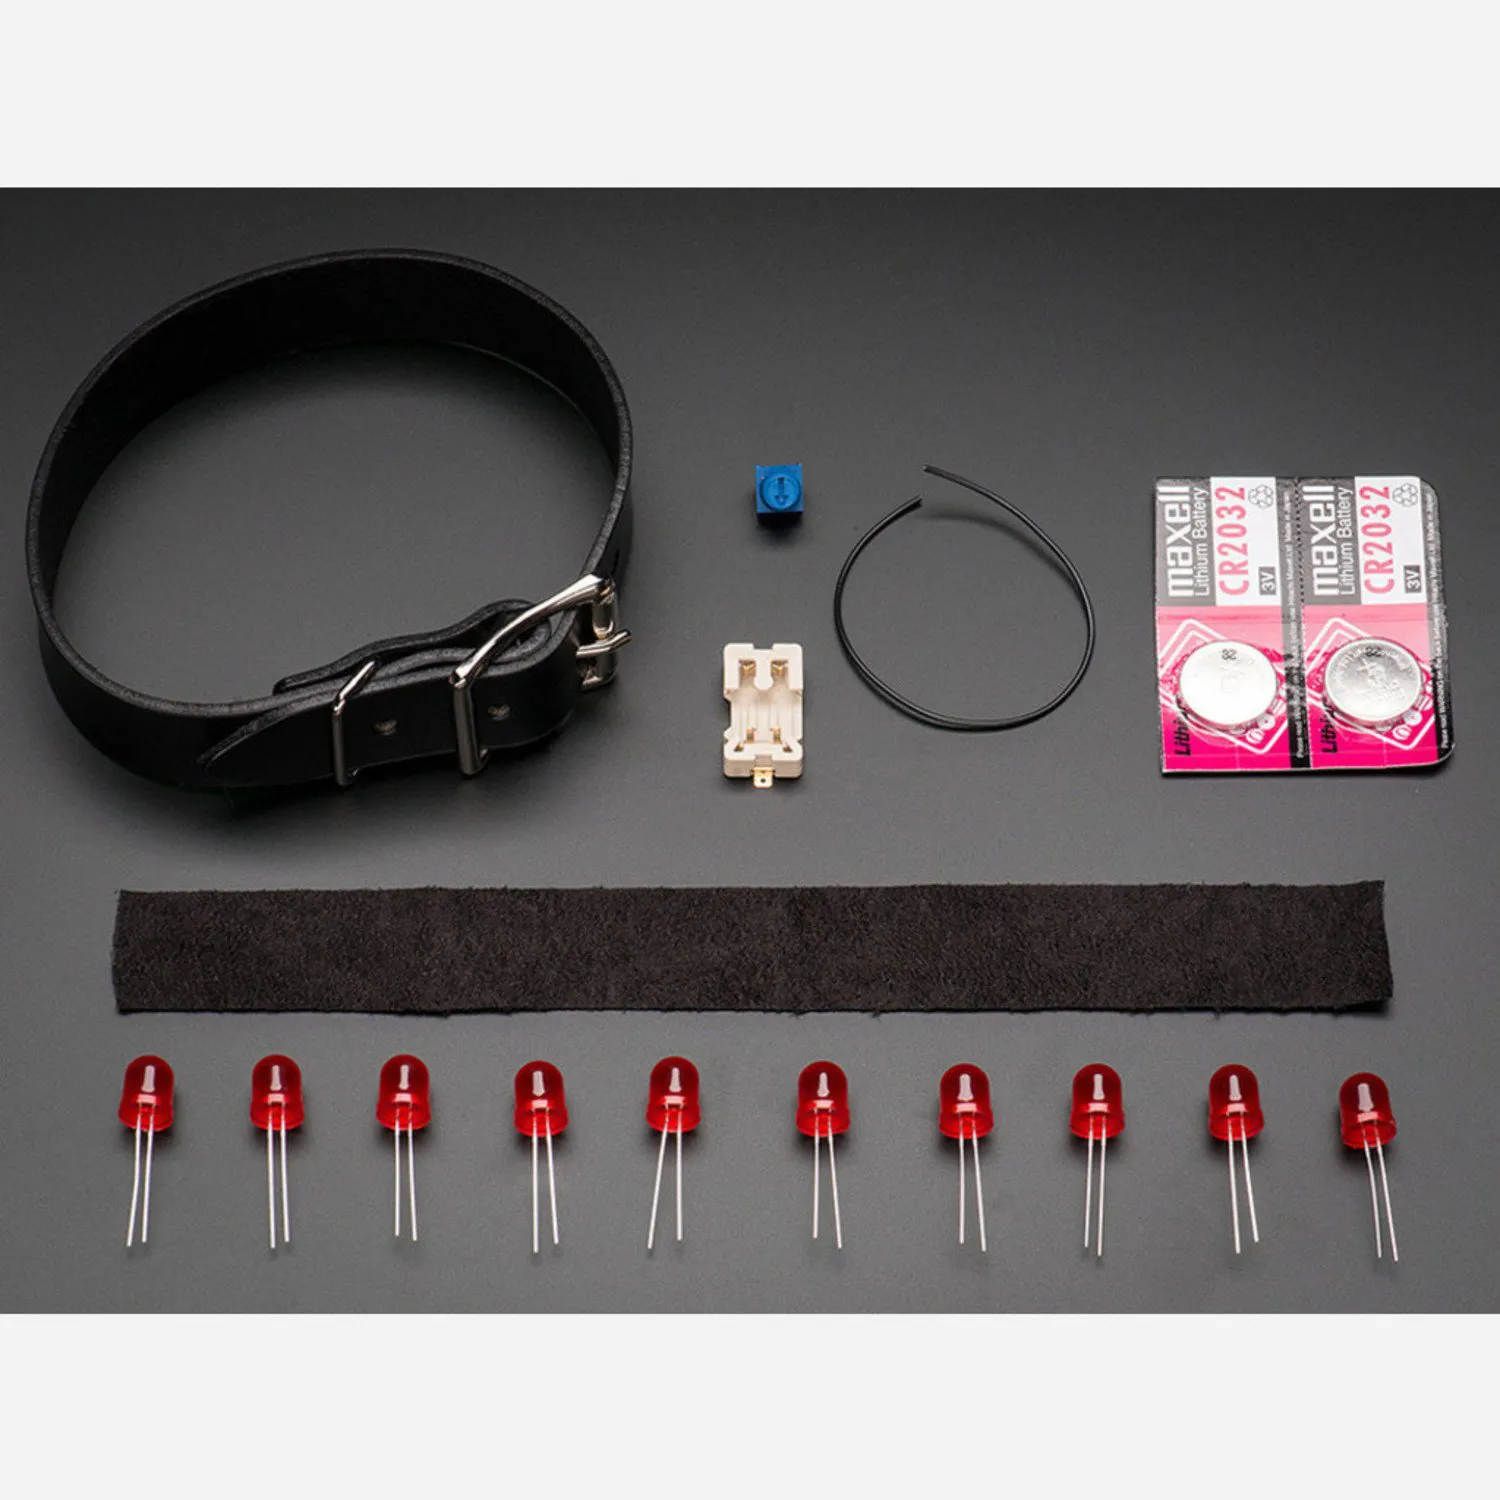 Photo of Punk LED Collar Kit - Red LEDs